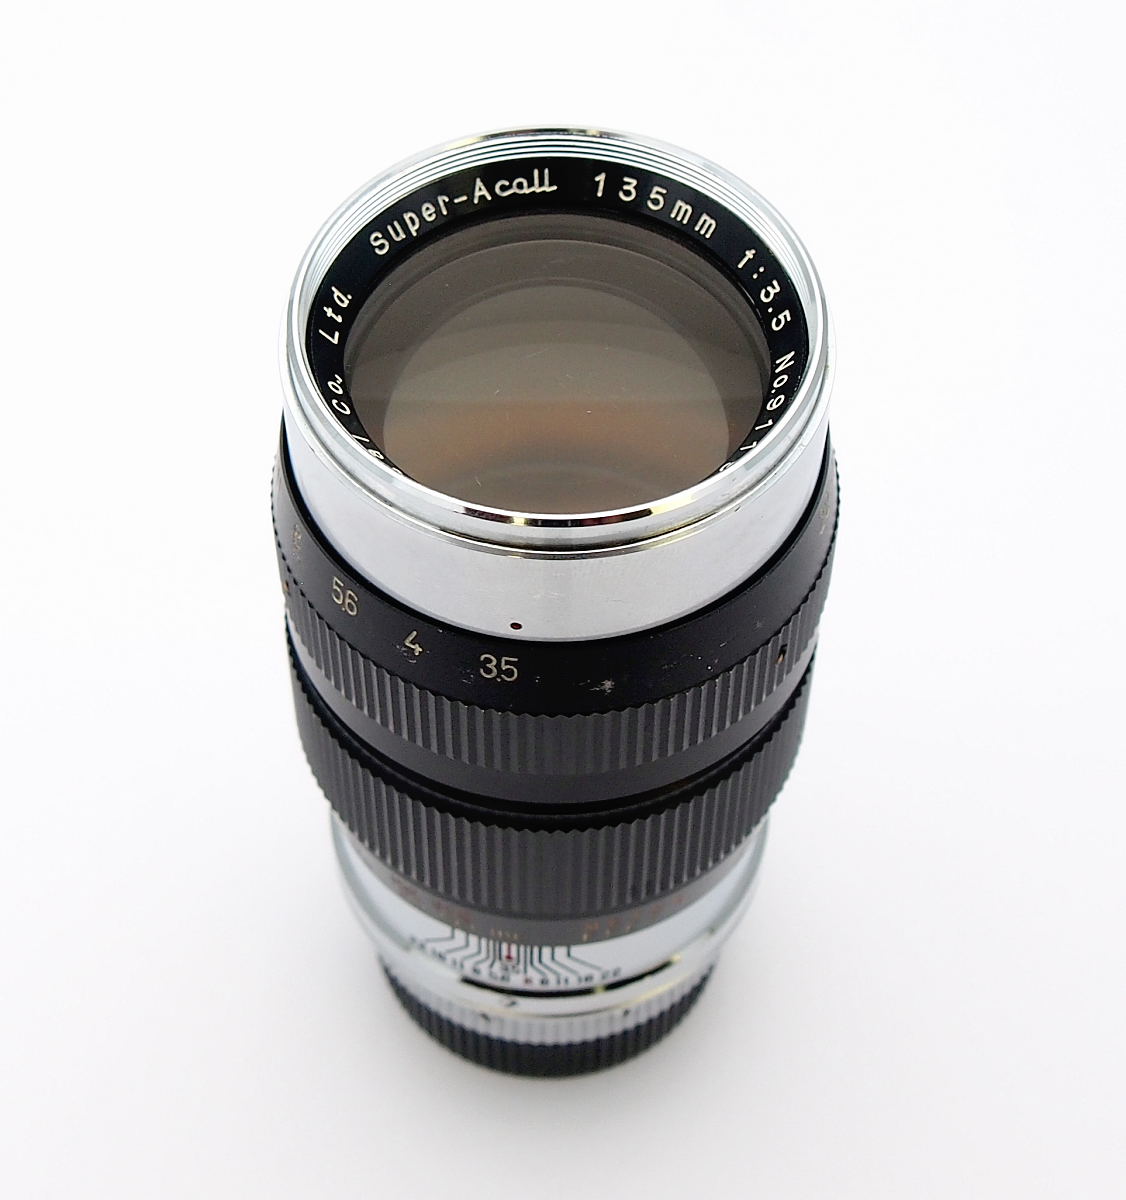 Kyoei Optical Super-Acall 135mm F3.5 L39 Mount Lens #9443